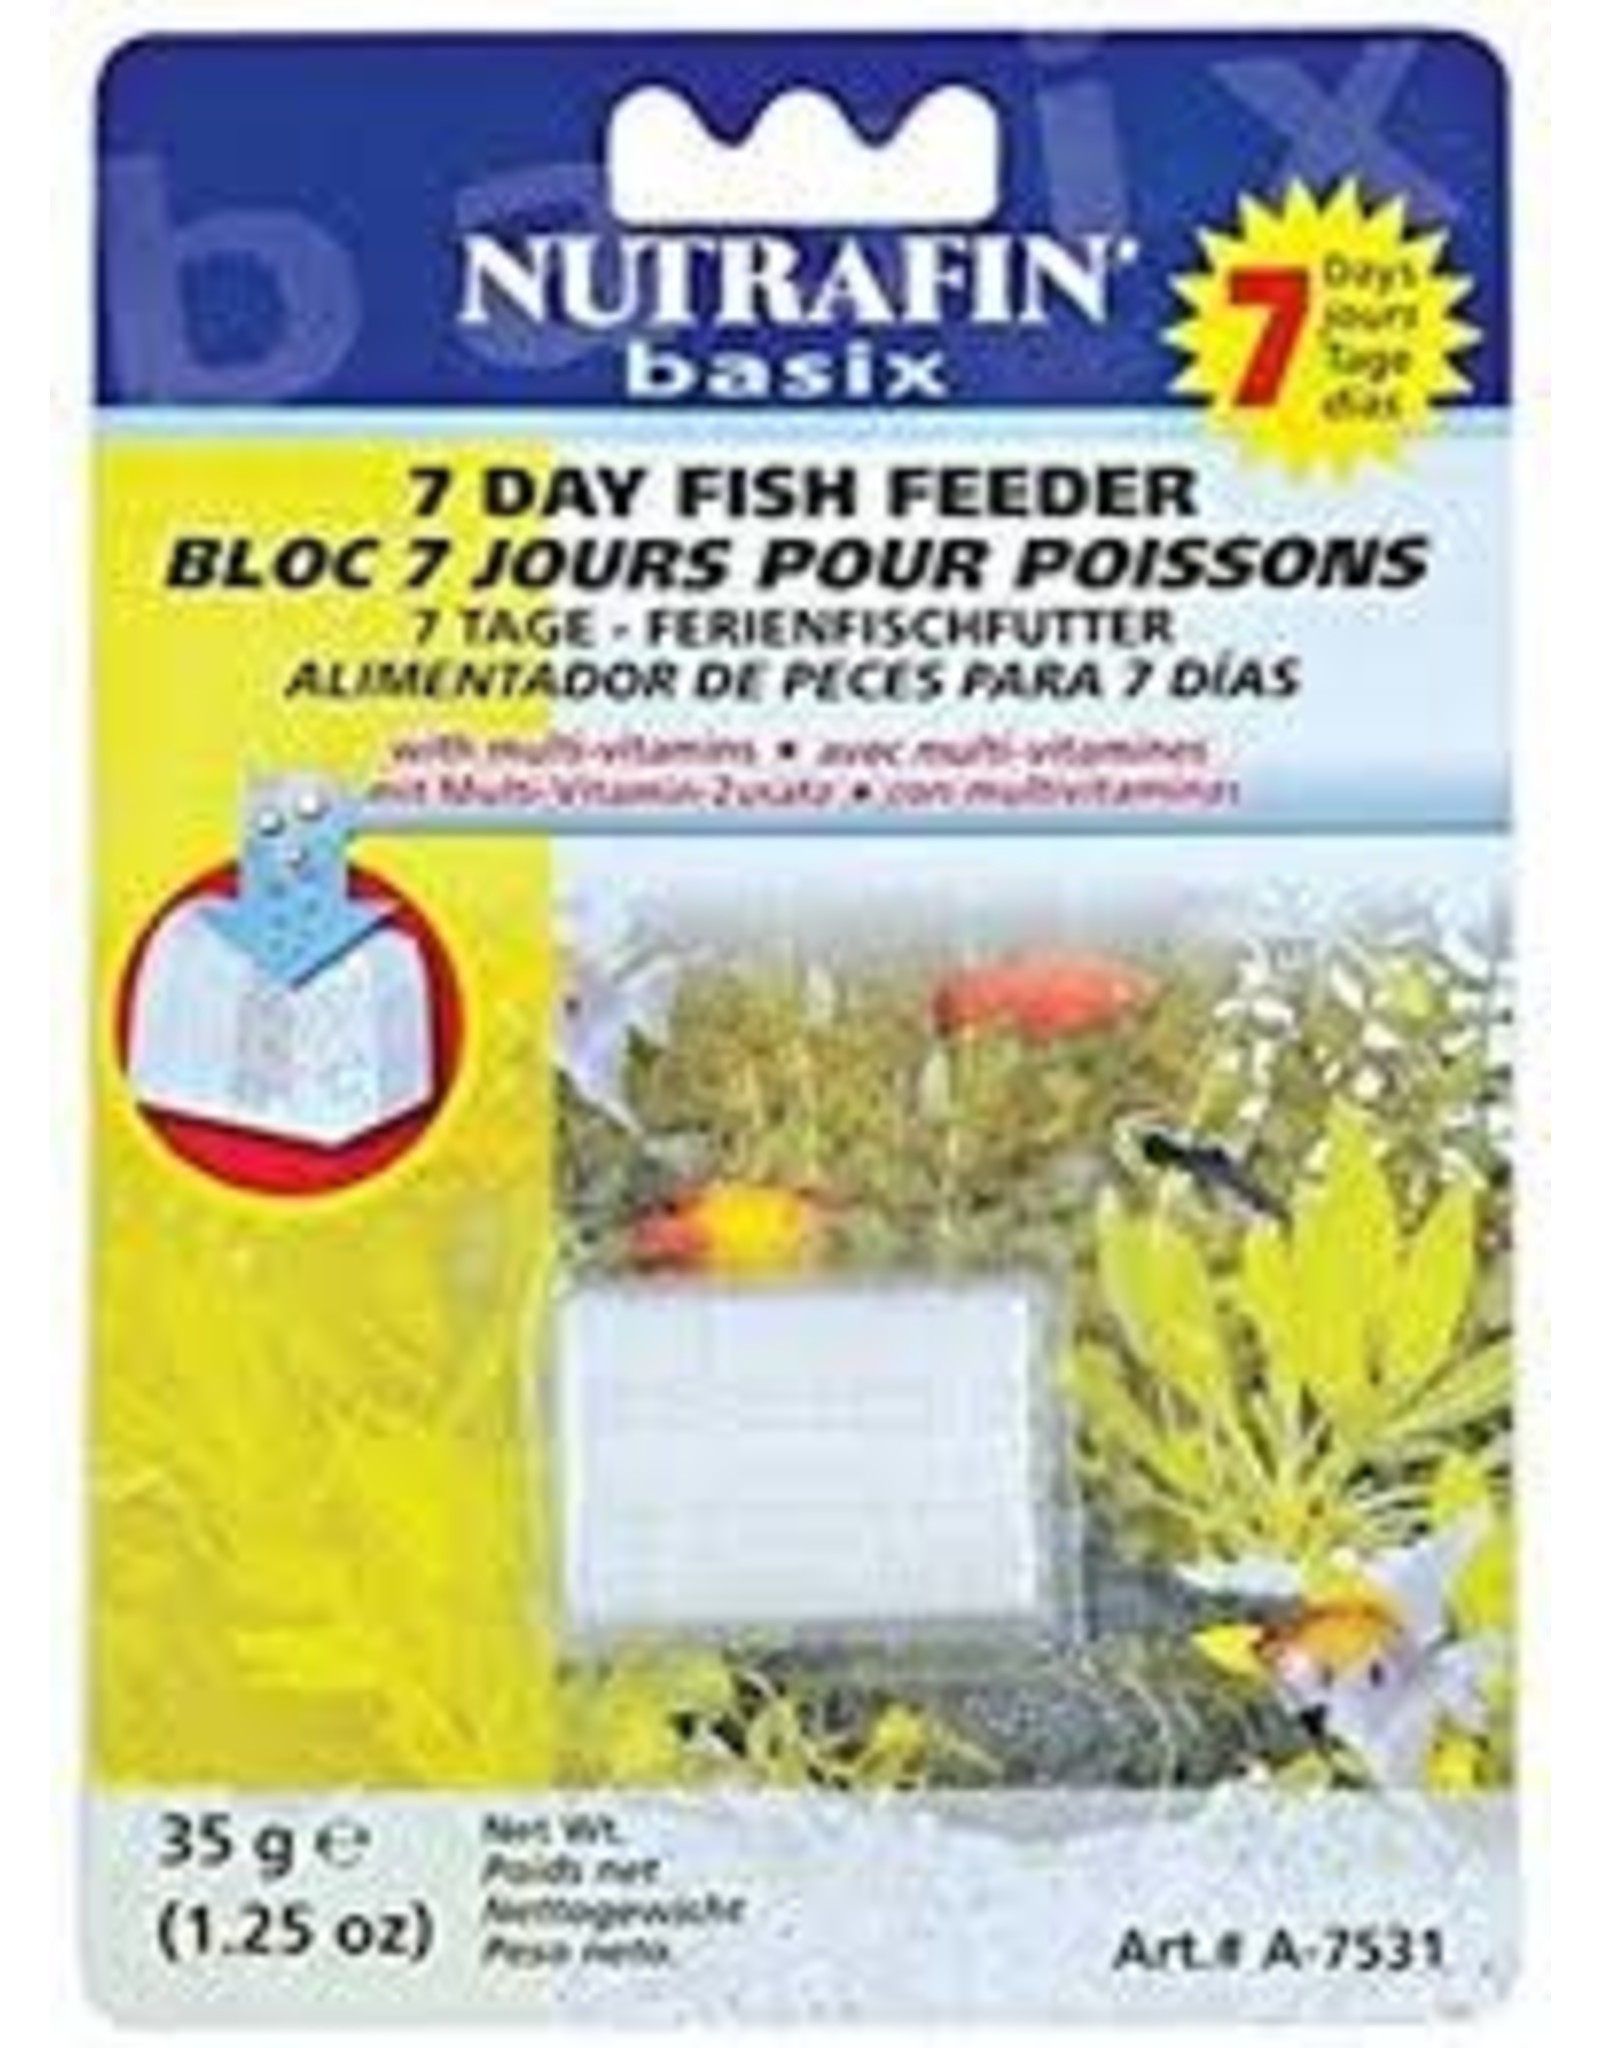 Nutrafin Aqua Plus Nutrafin - Treasure Chest Feed V